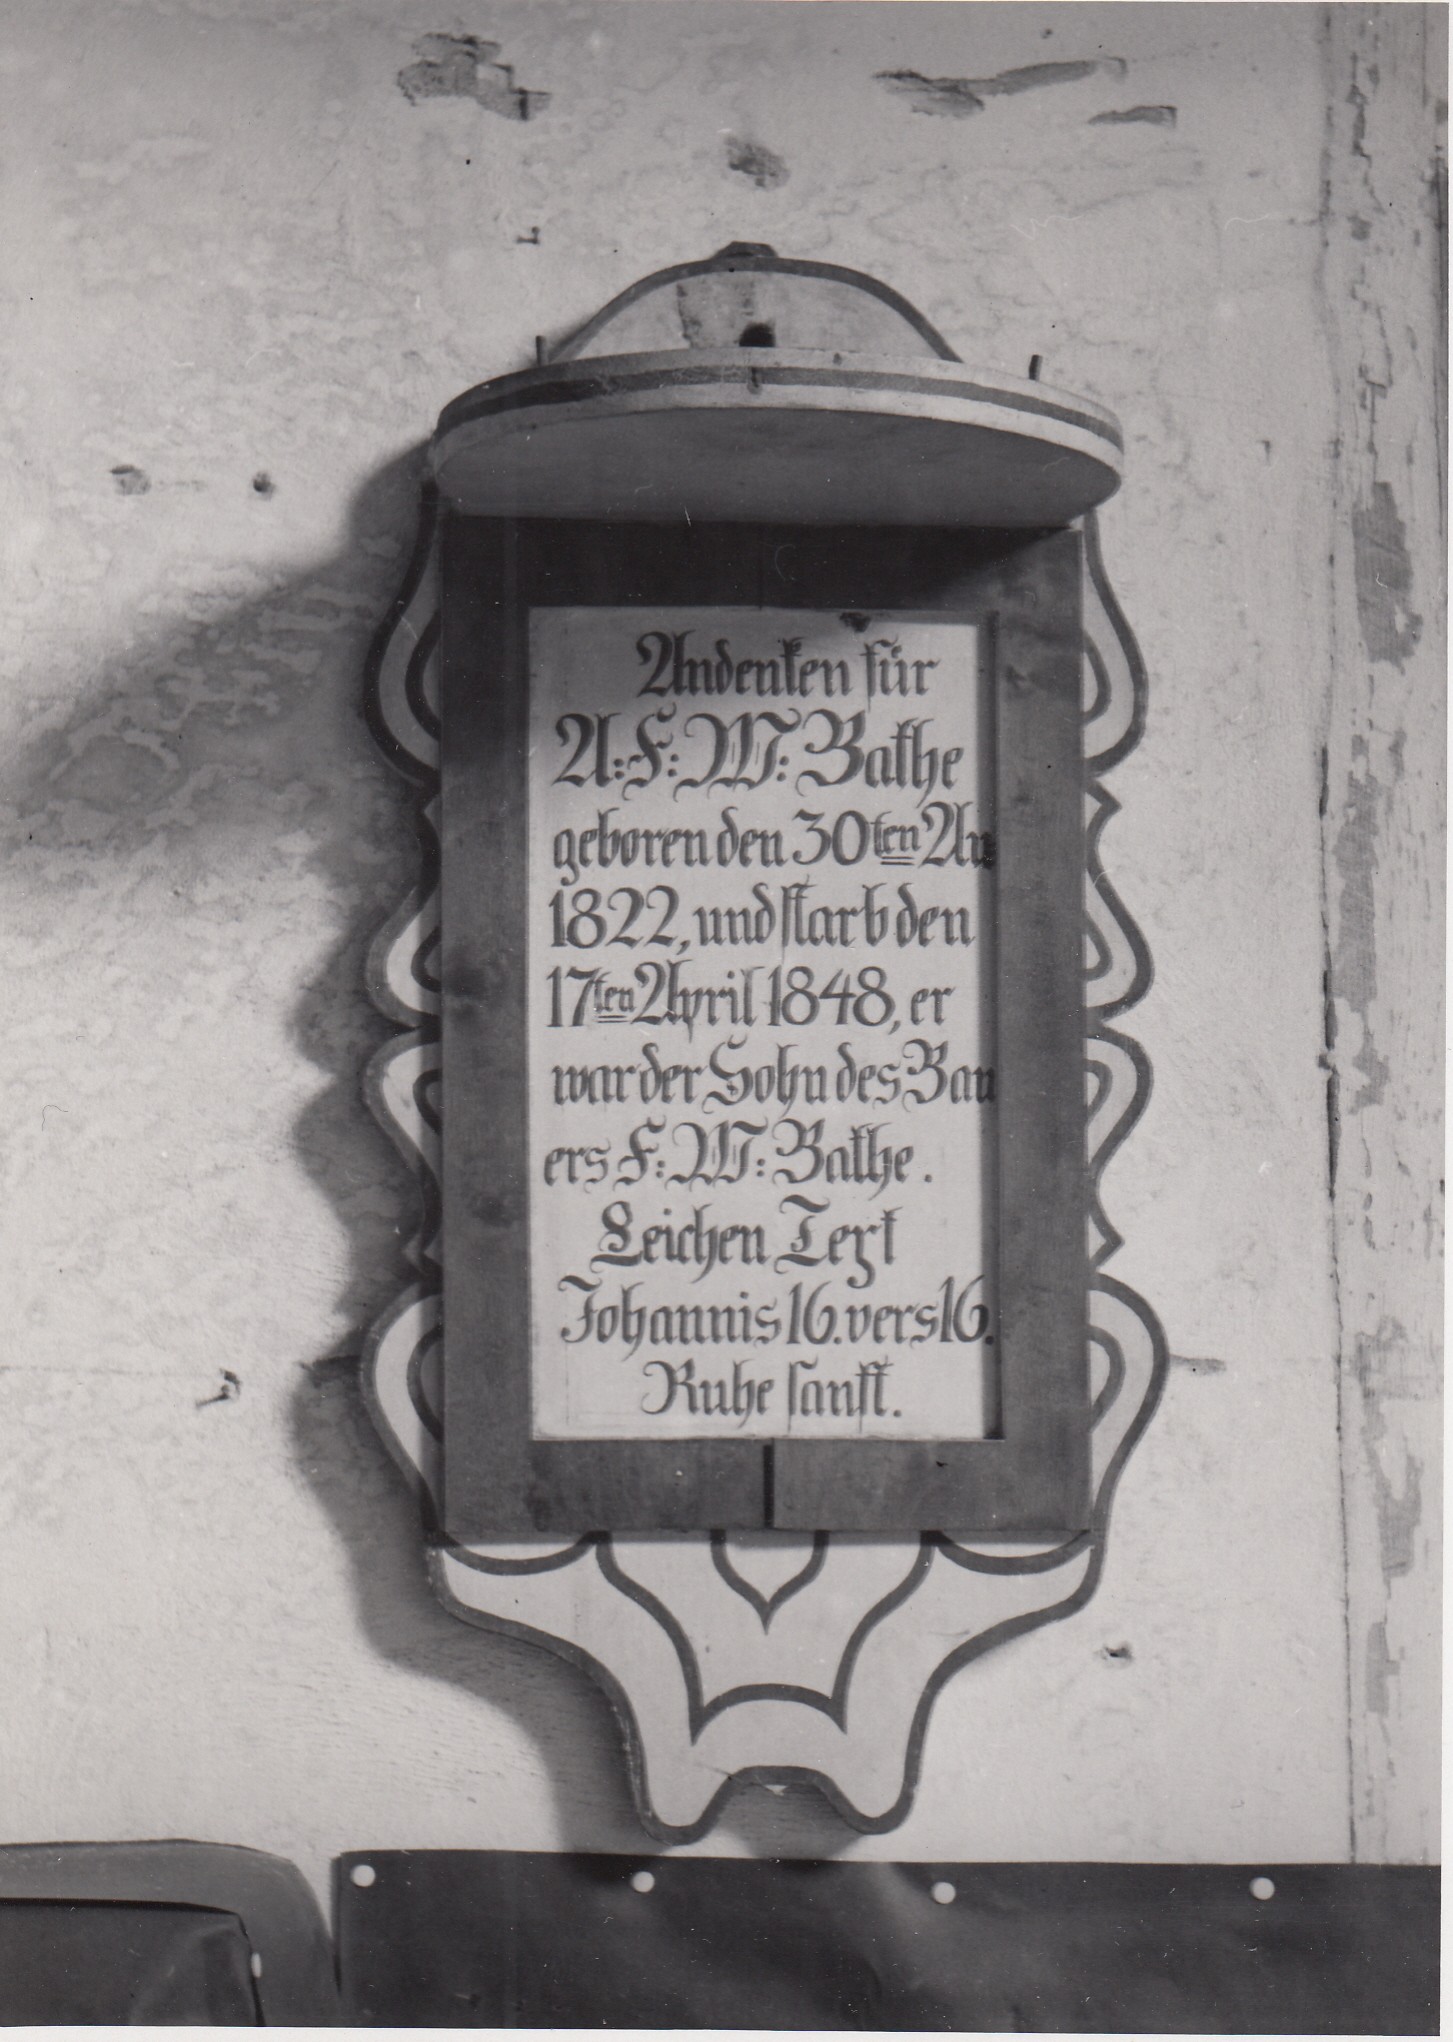 2511: Epitaph (Museumsverband des Landes Brandenburg e.V. CC BY-NC-SA)